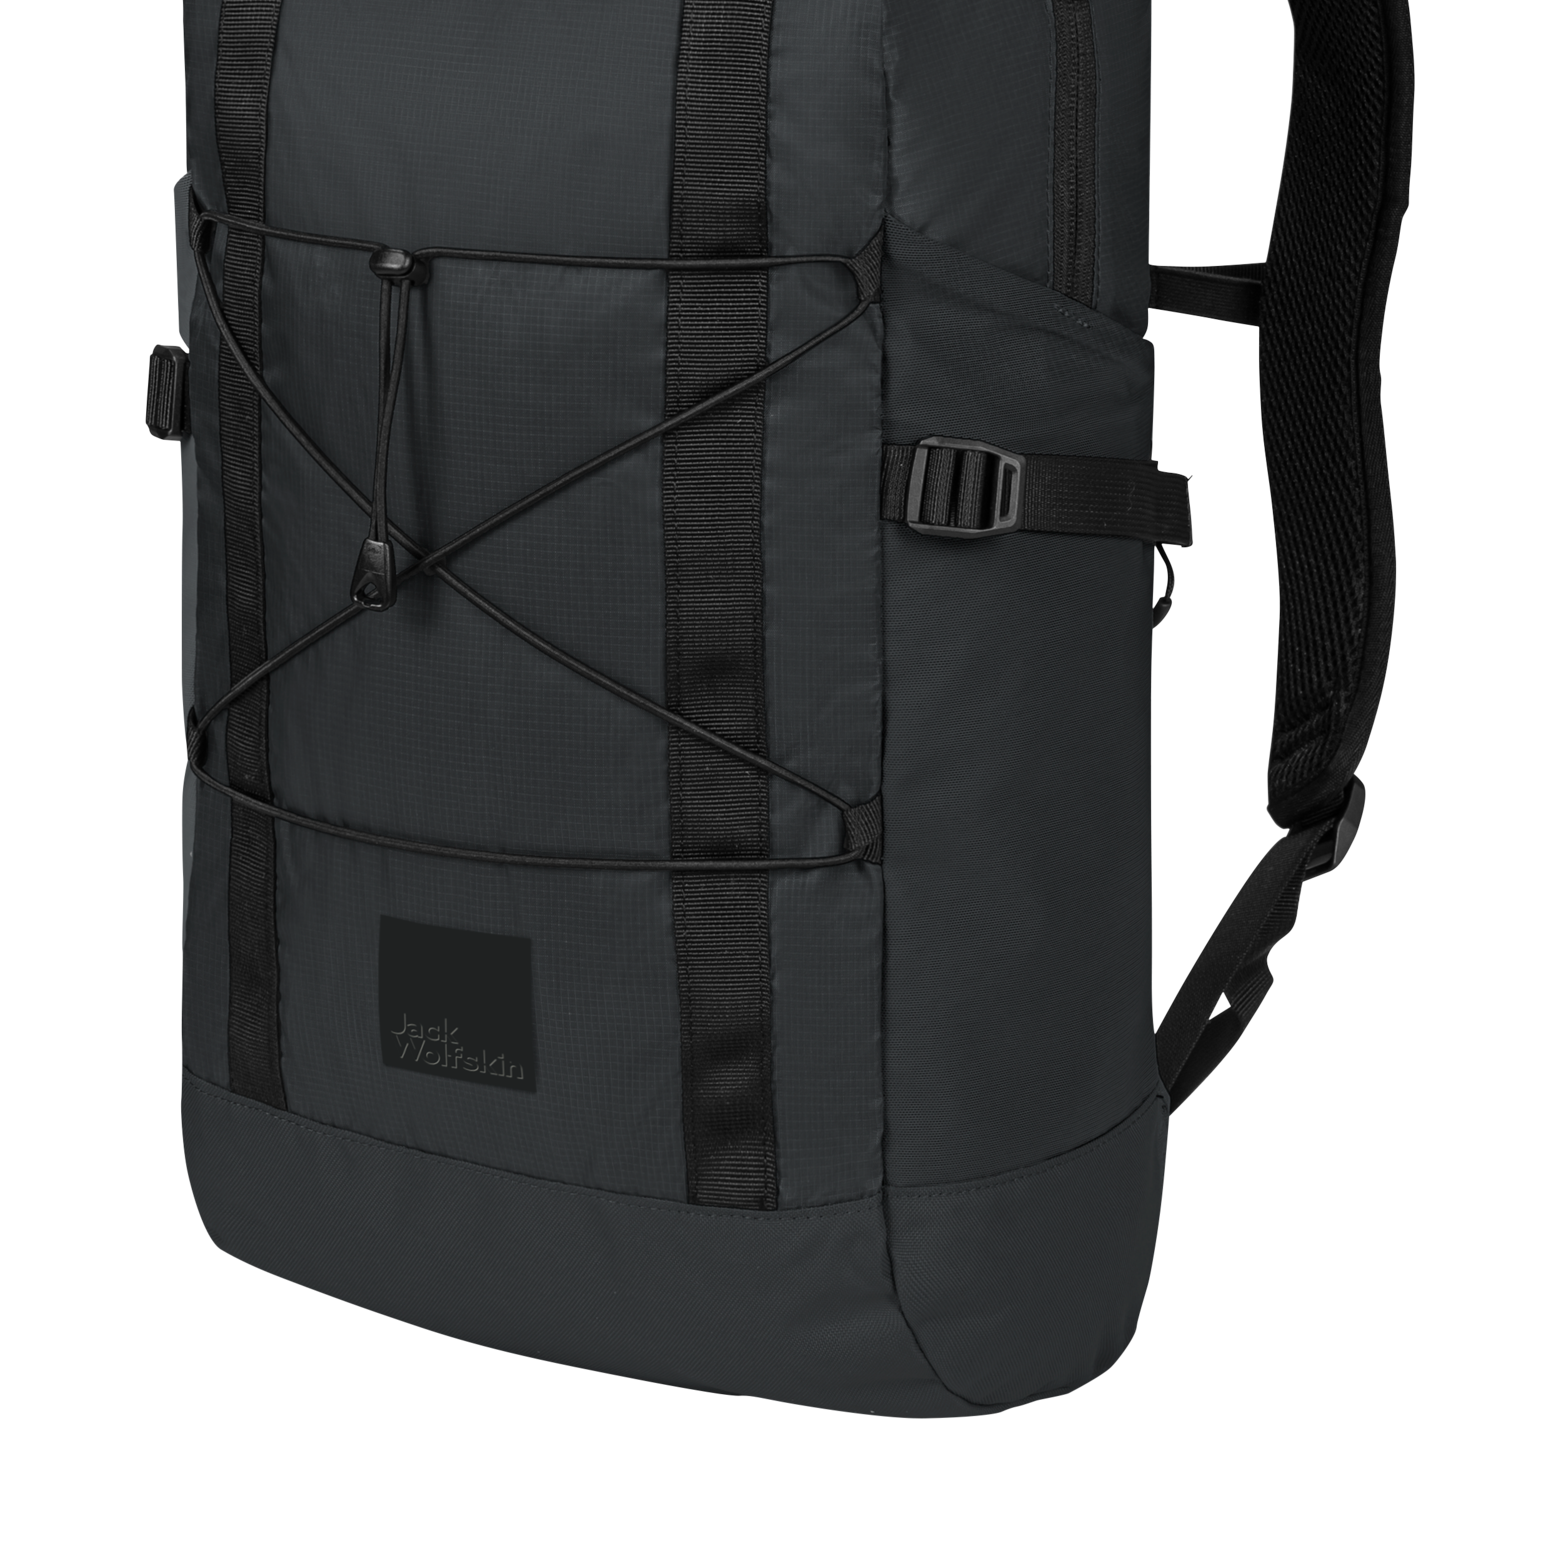 Wanderthirst 20L Backpack